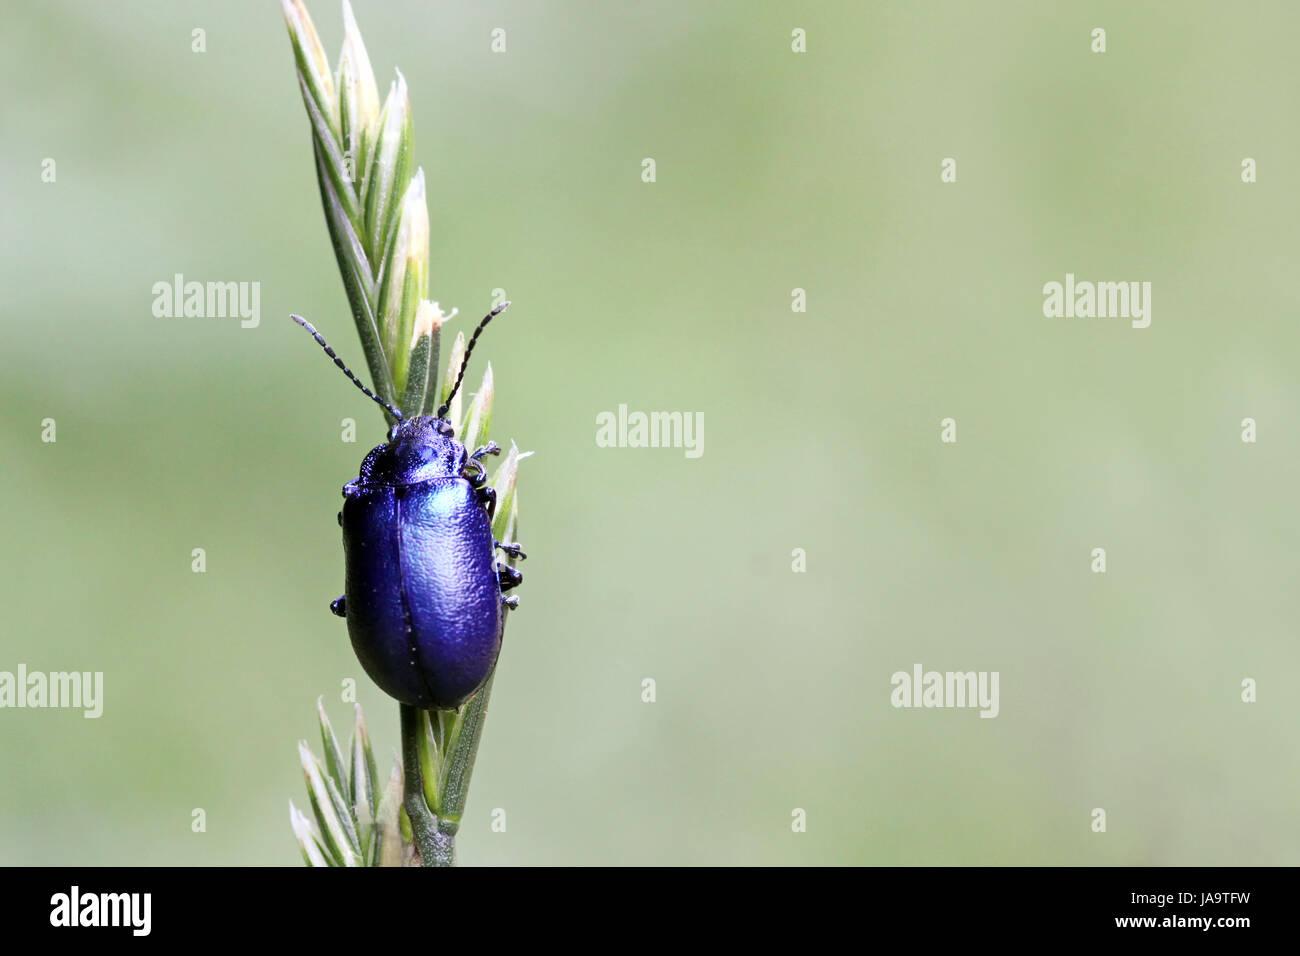 blue, south tyrol, beetle, azure, blade of grass, meadow, grass, lawn, green, Stock Photo